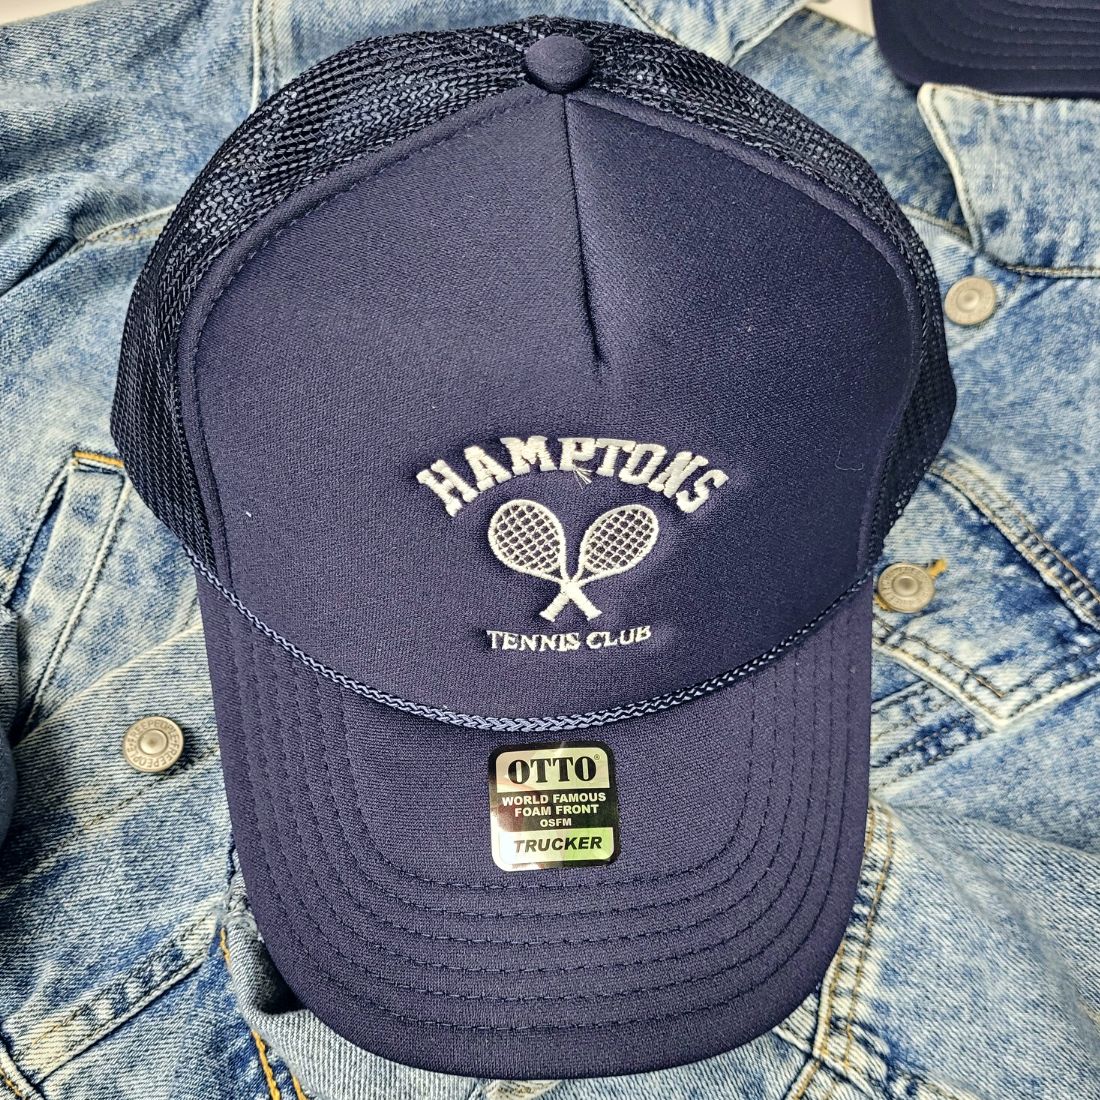 hamptons tennis club hat in navy